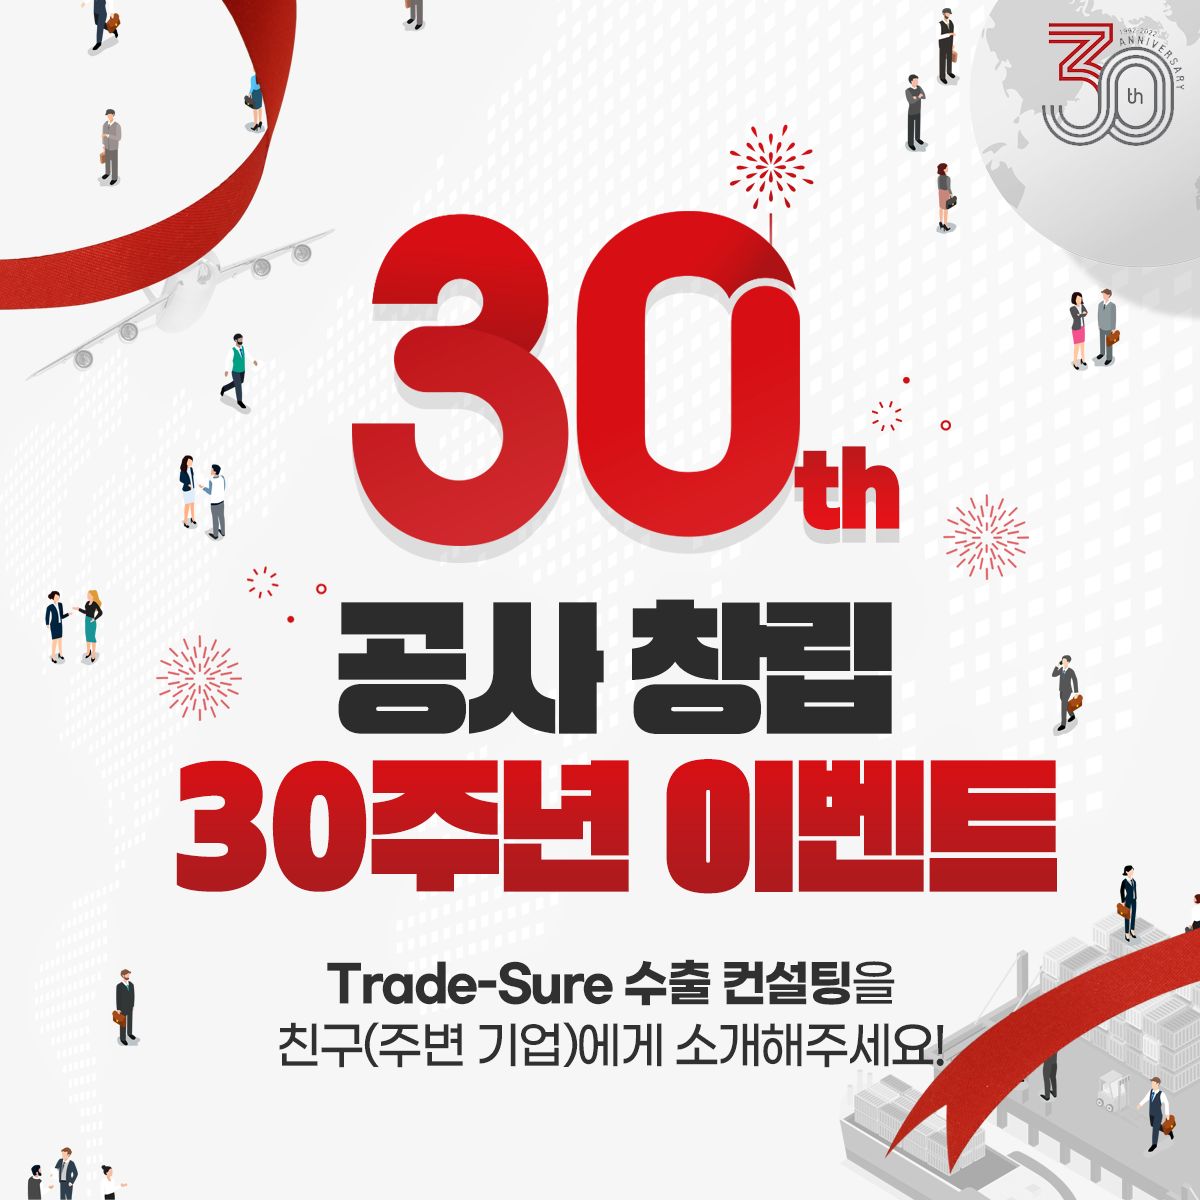 [Trade-Sure 컨설팅센터] 공사 창립 30주년 이벤트 실시